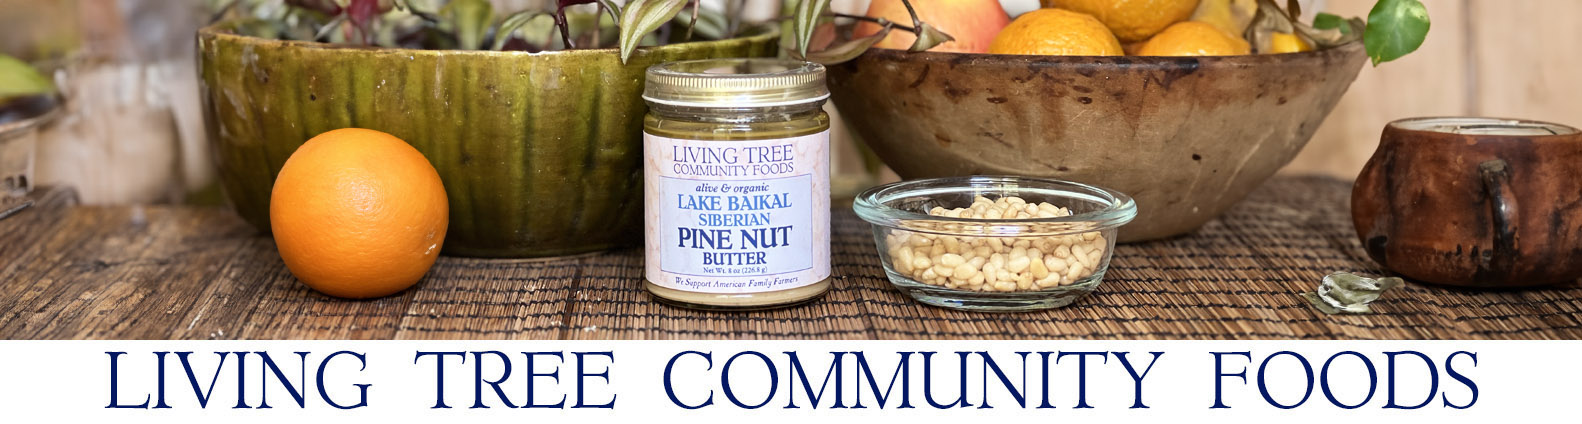 Pine Nut Butter Newsletter Header